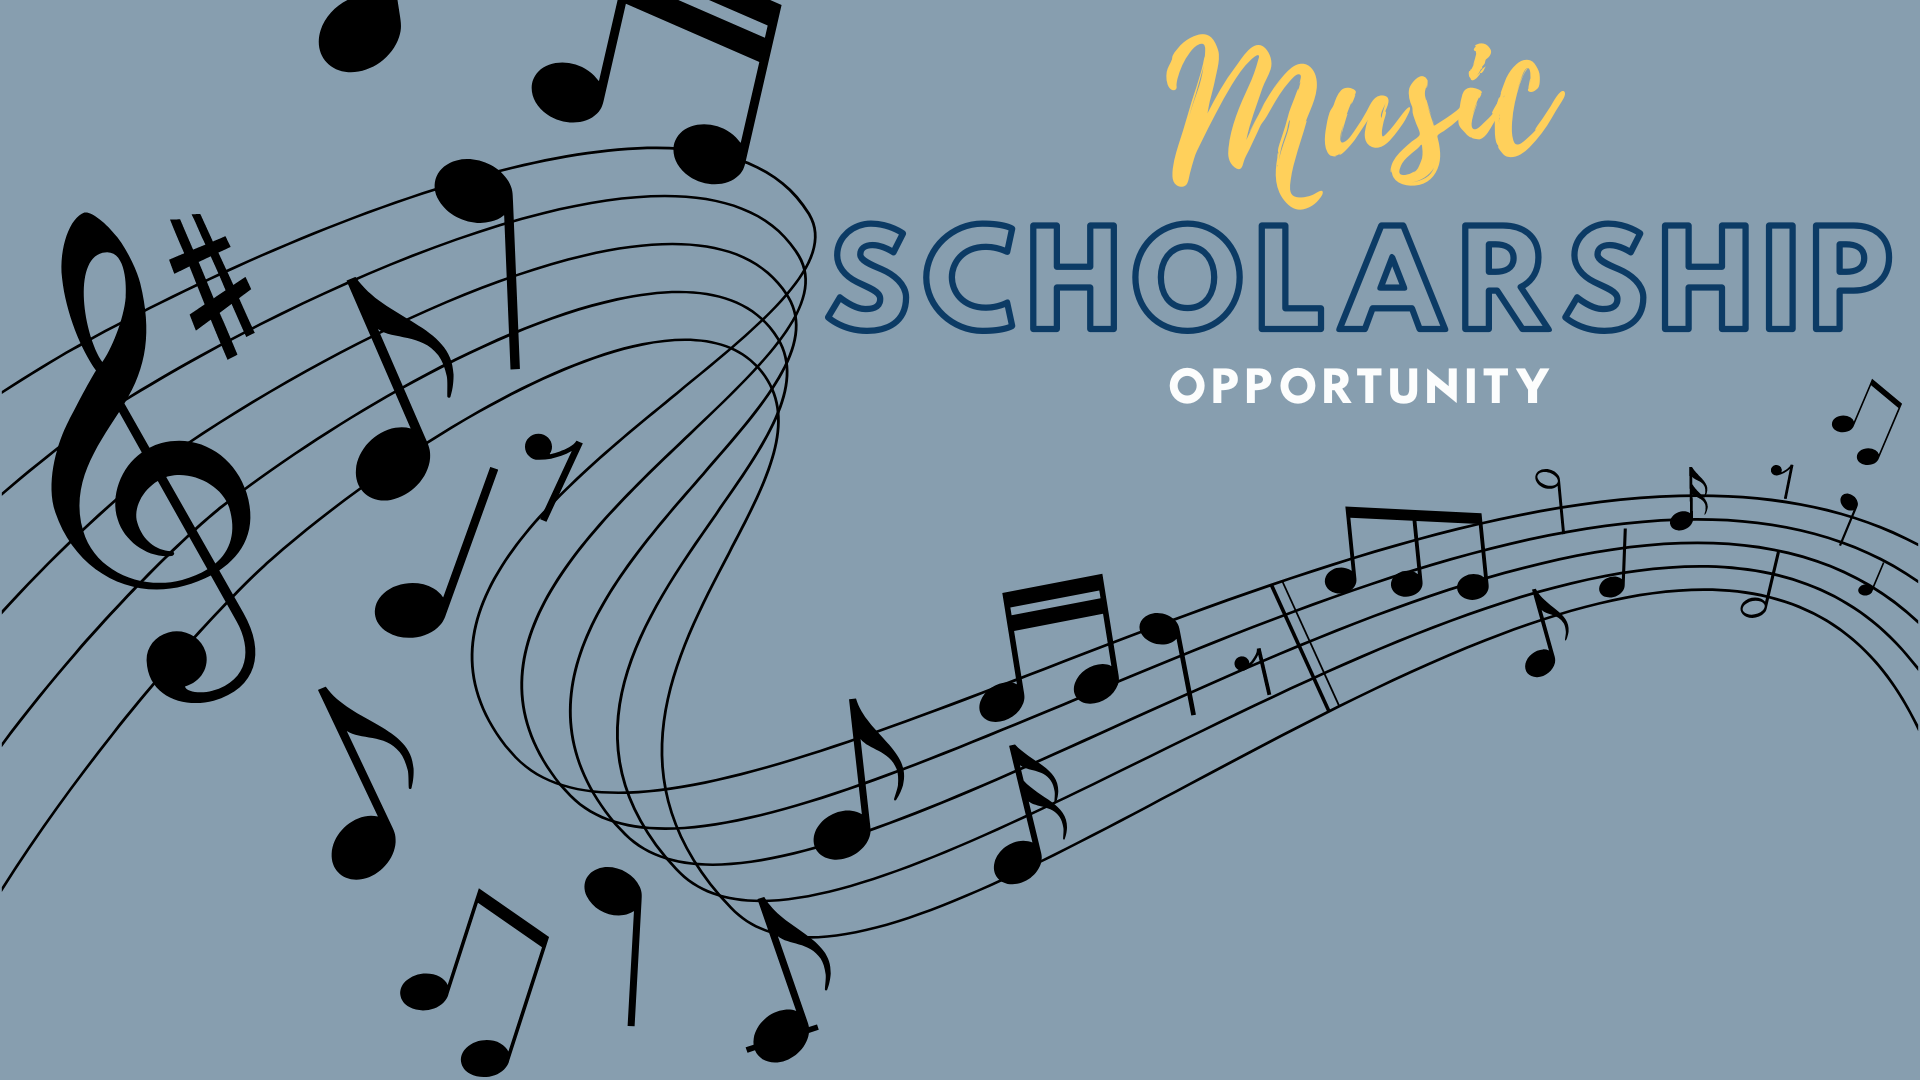 Music Scholarship